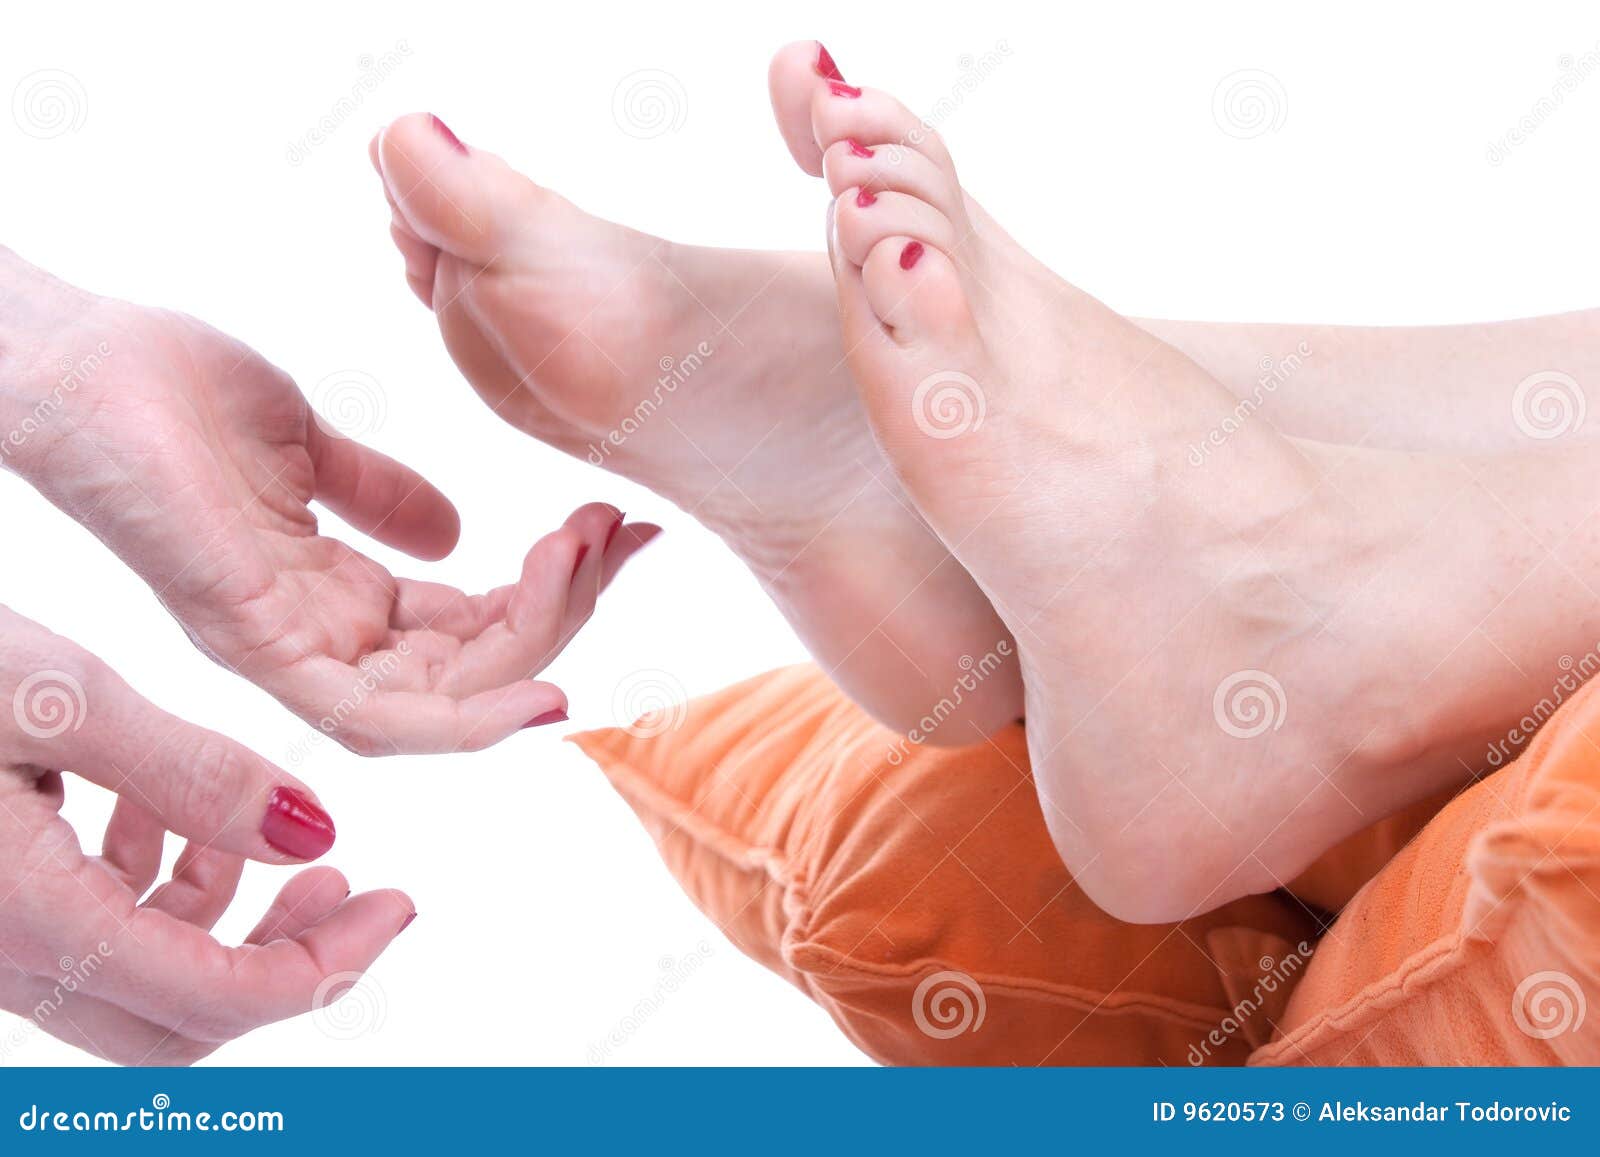 feet tickled